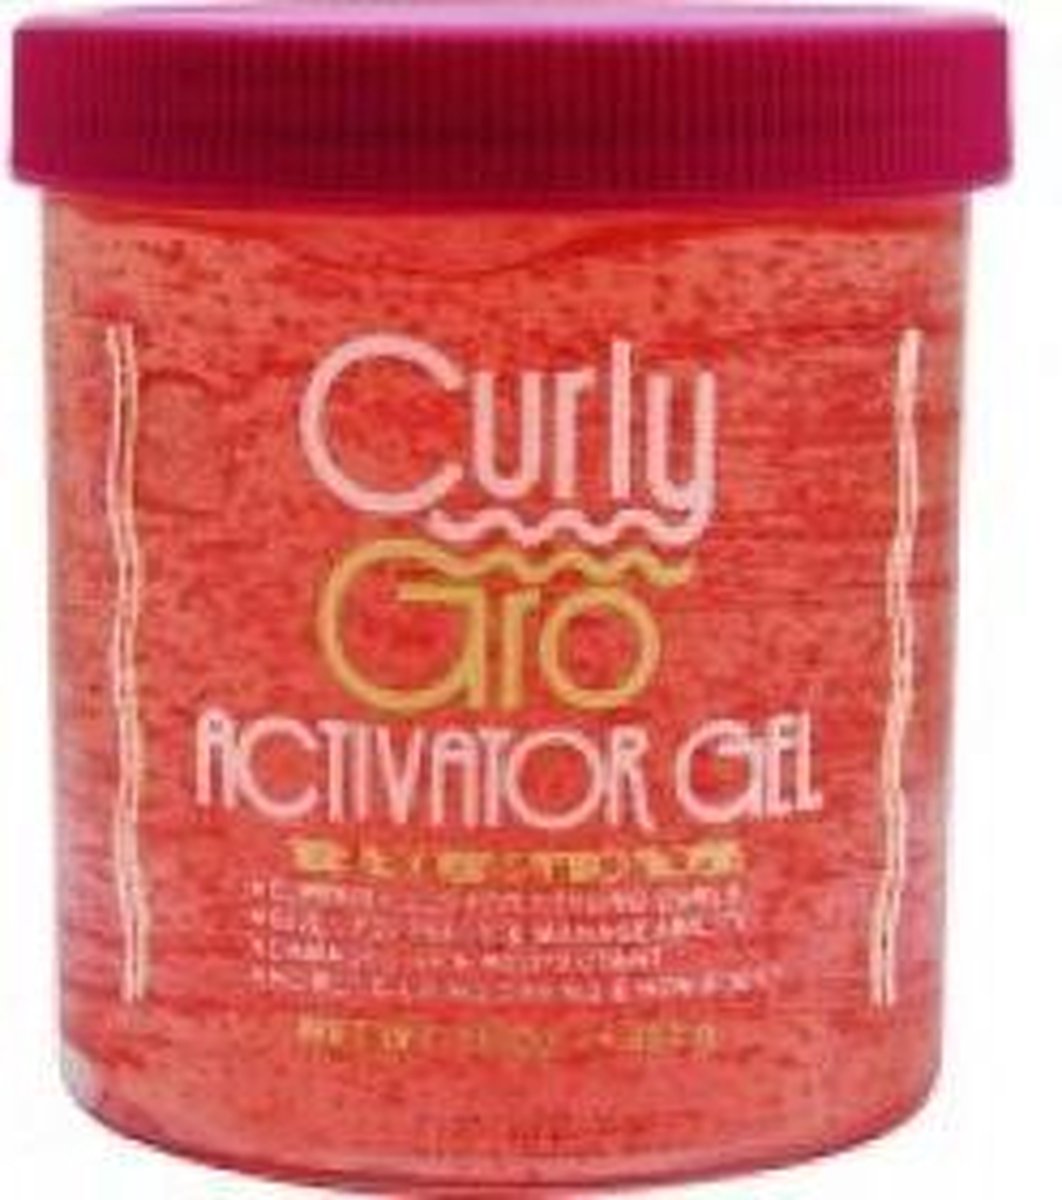 Curly Gro Gel Activator 454gr